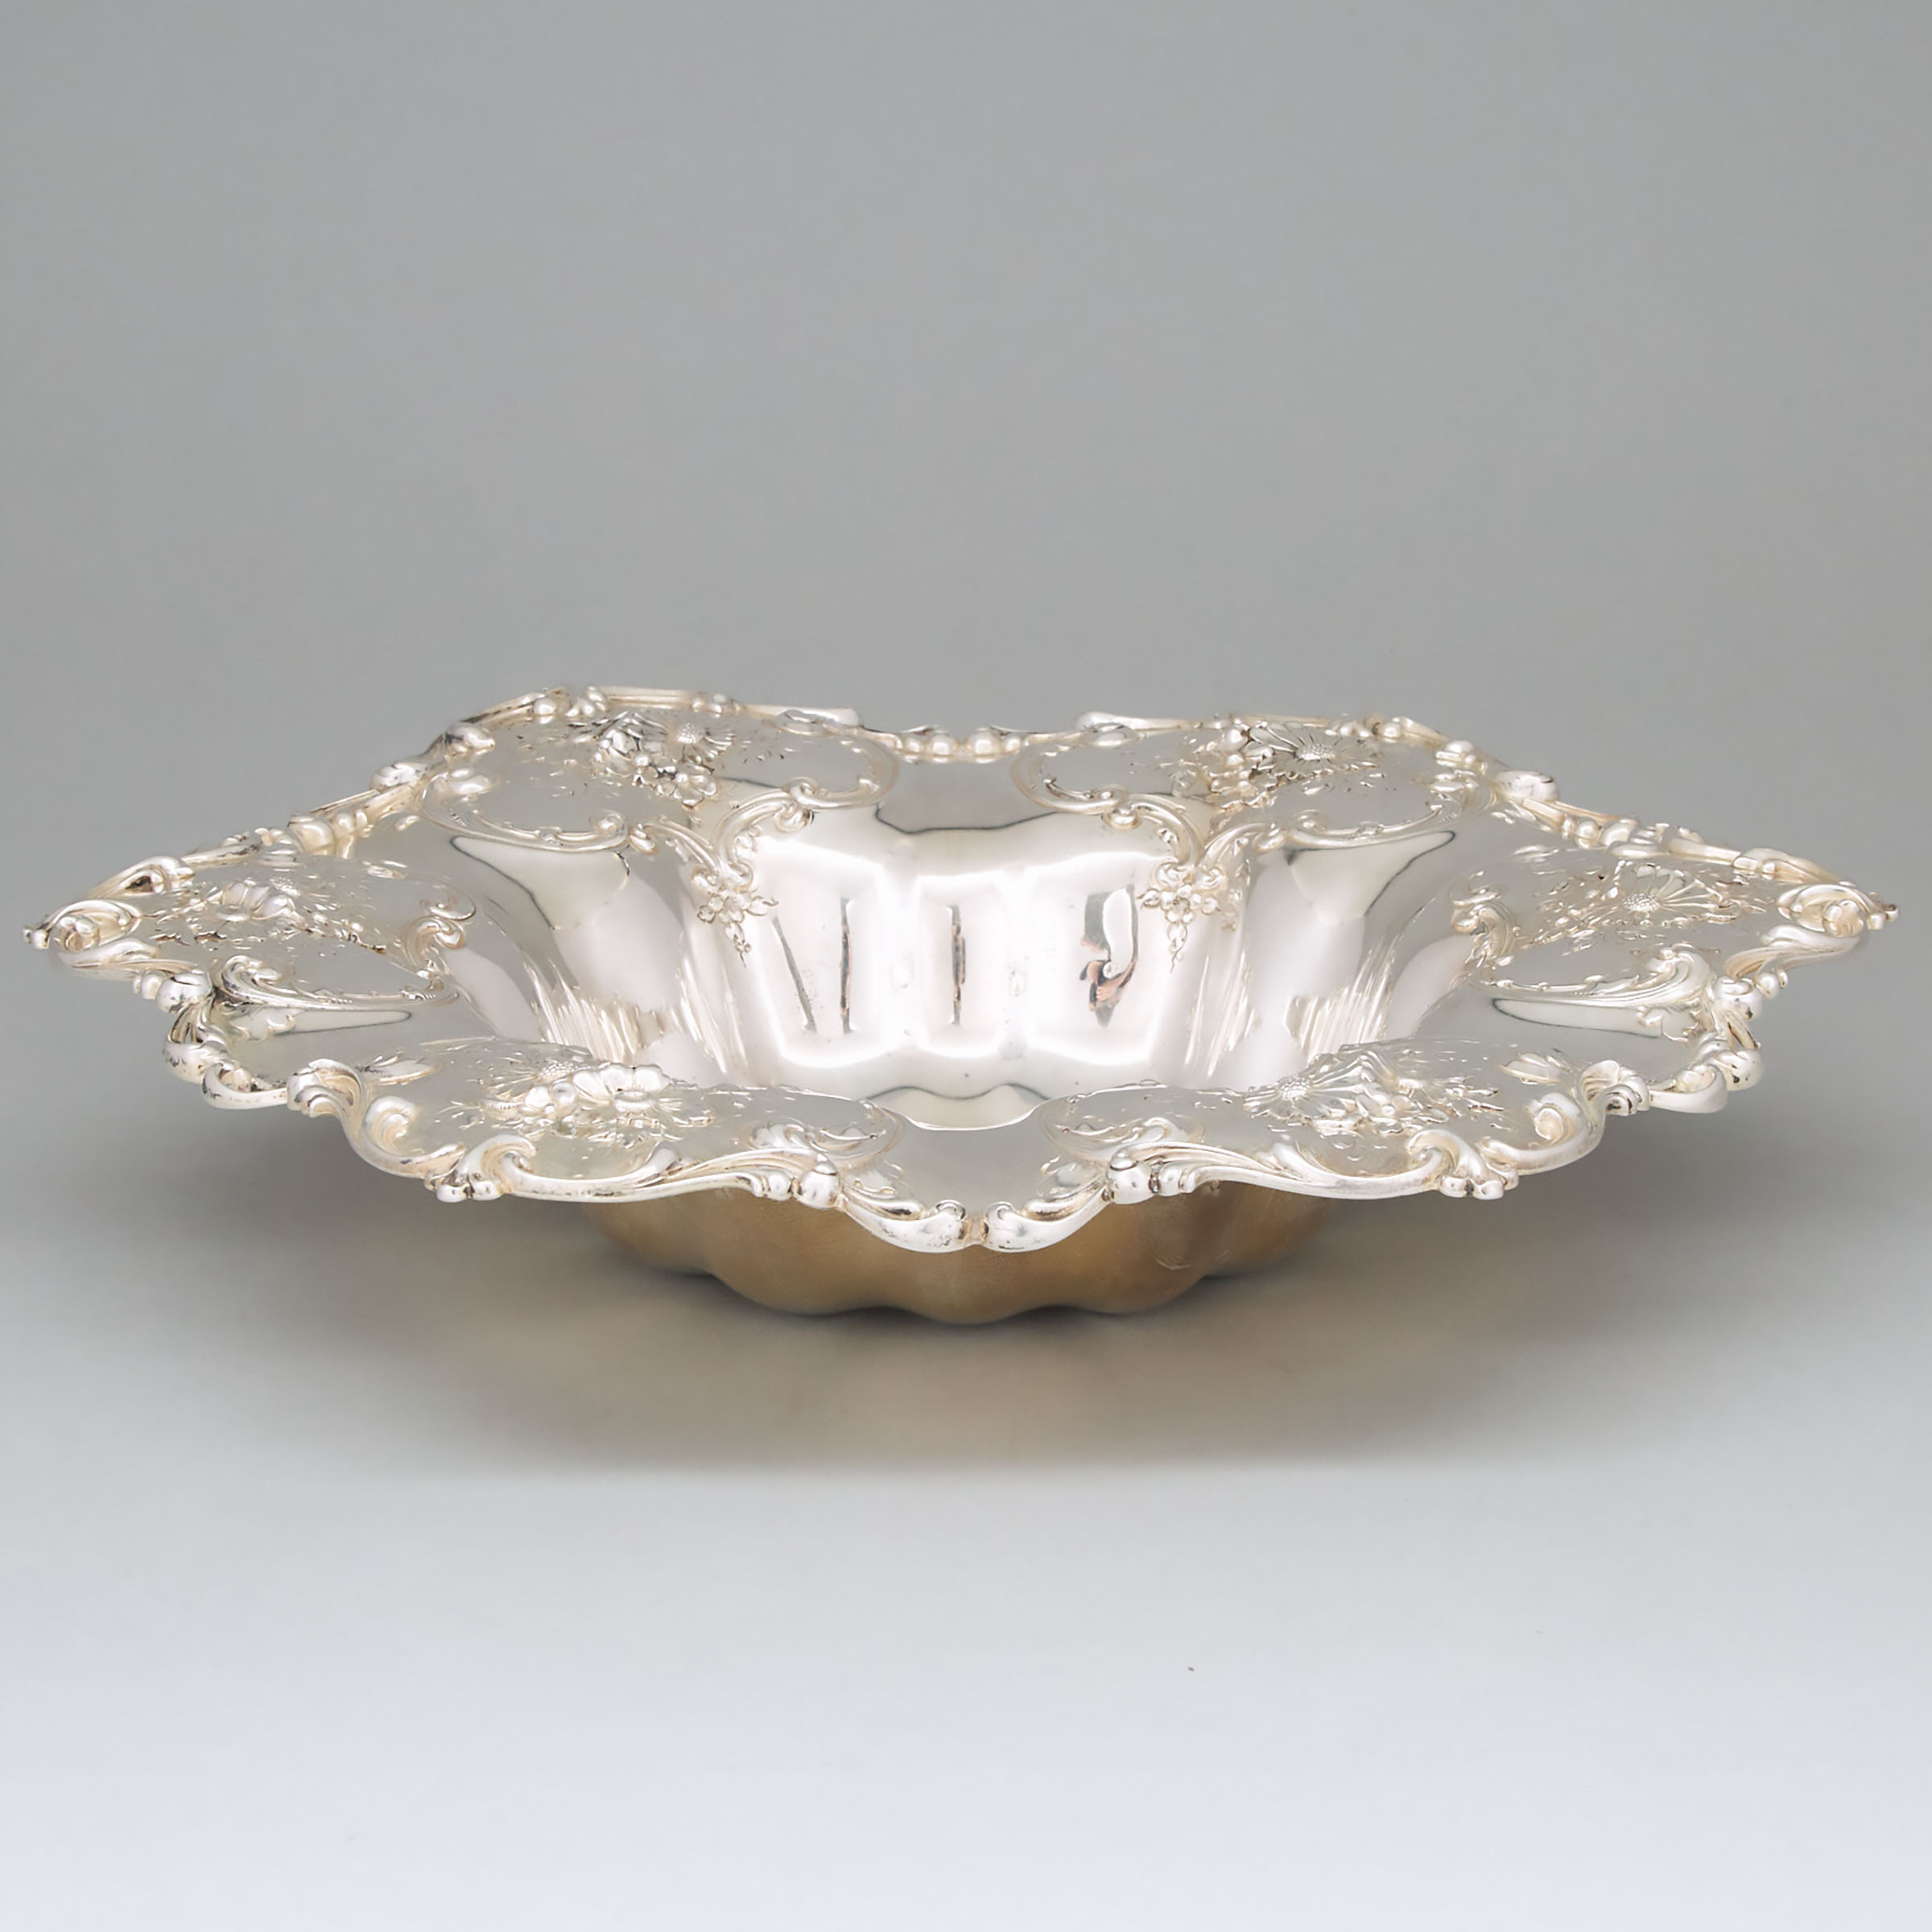 American Silver Shaped Circular Bowl, J.E. Caldwell & Co., Philadelphia, Pa., early 20th century